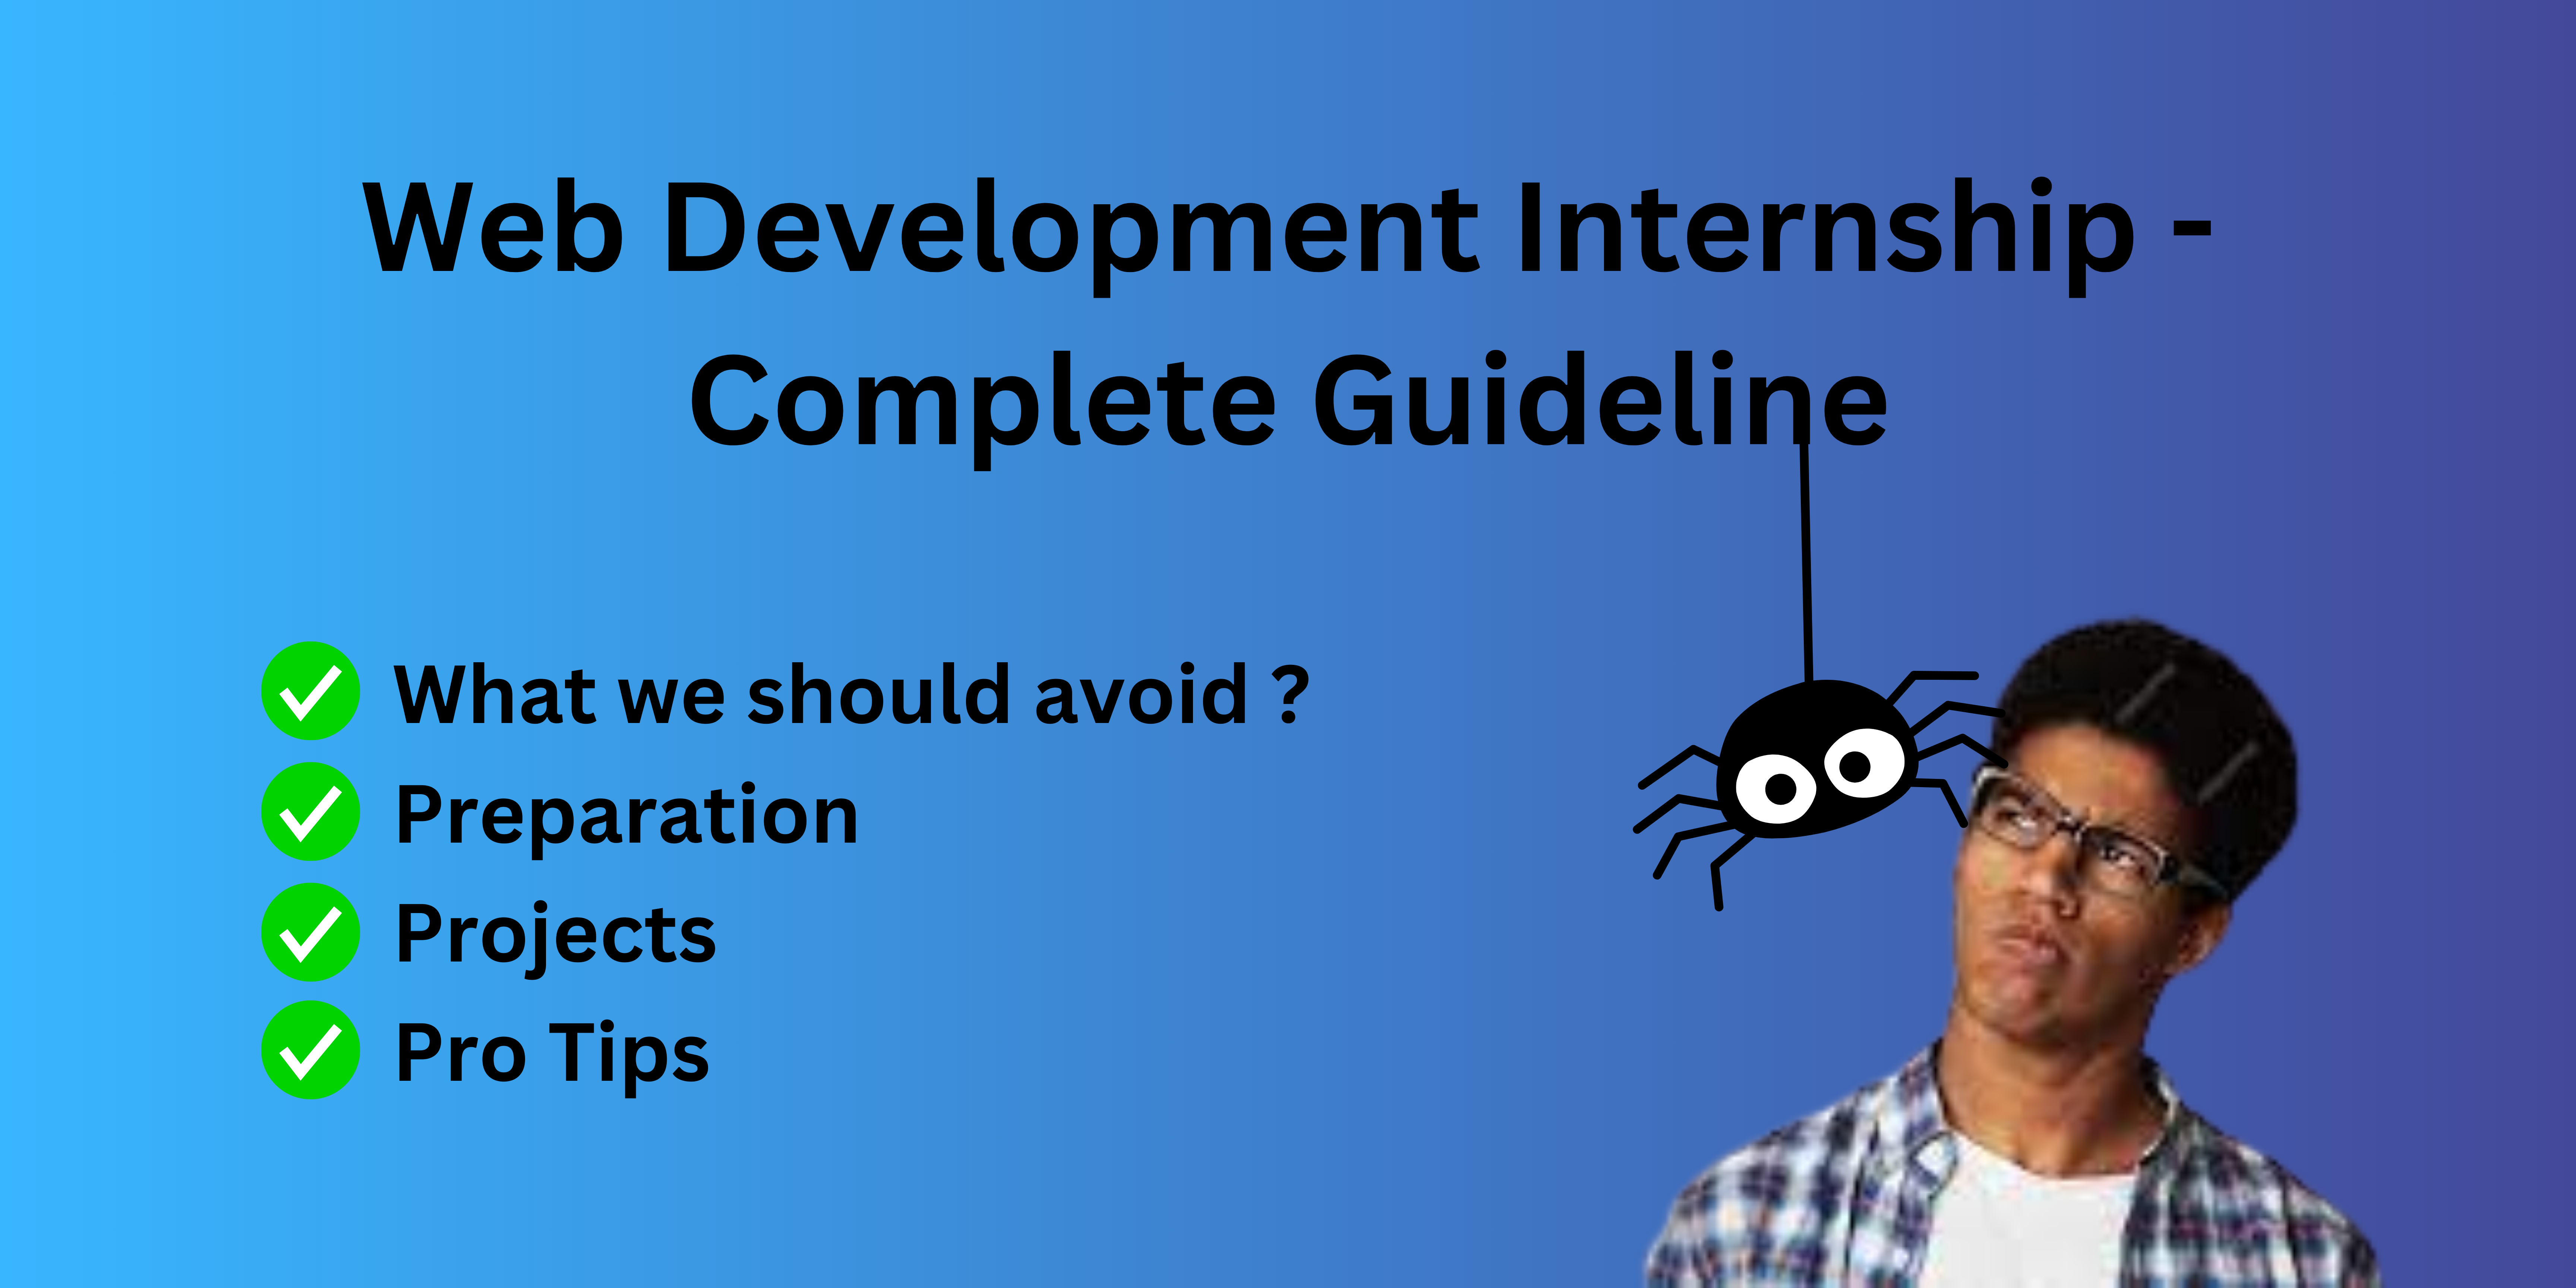 Web Development Internship - Complete Guideline